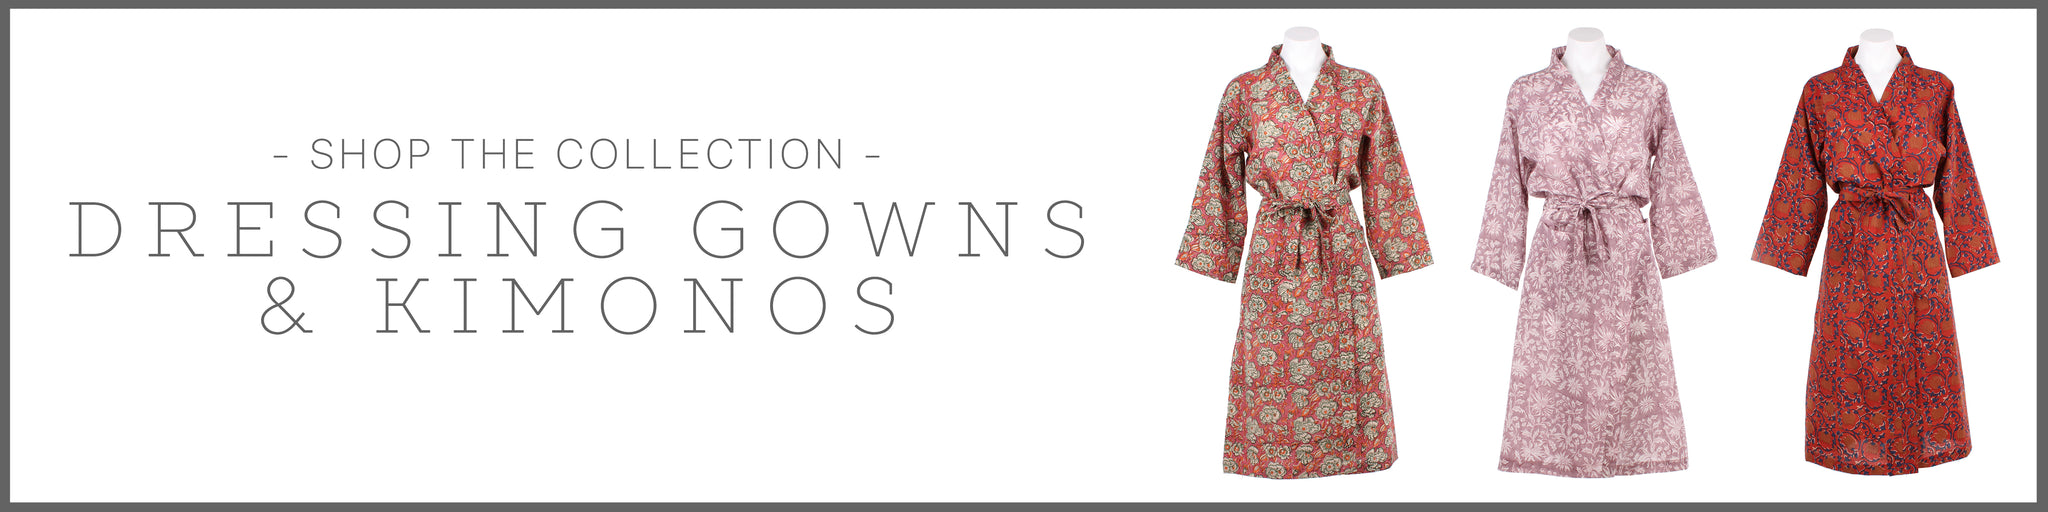 Dressing Gowns & Kimonos at Maven & Kit